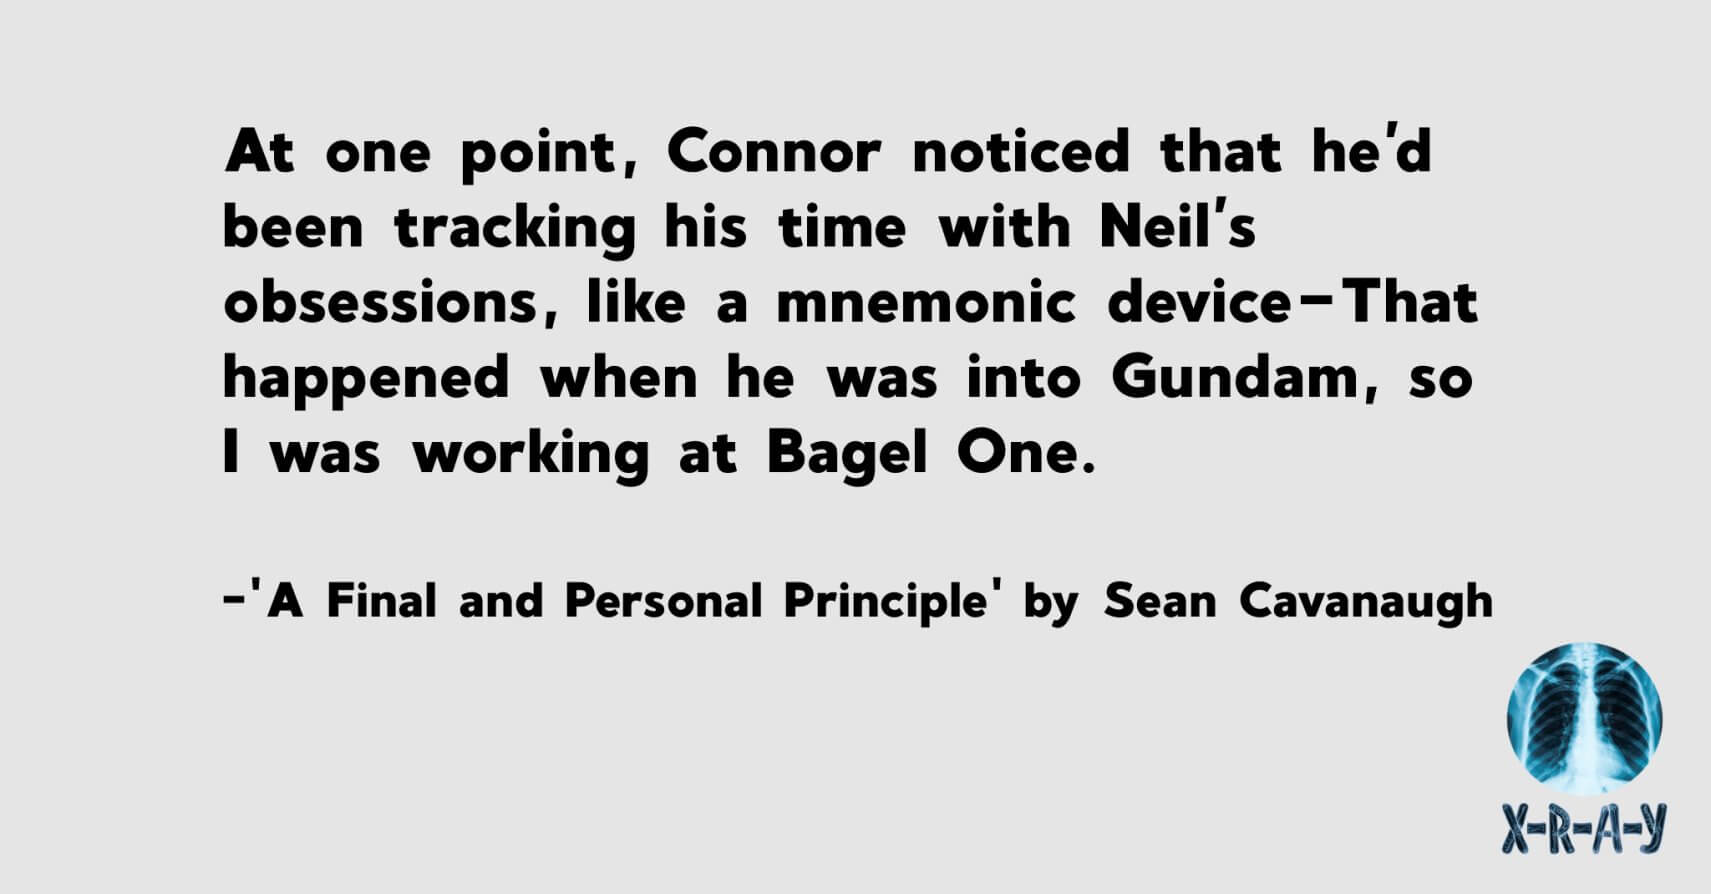 A FINAL AND PERSONAL PRINCIPLE by Sean Cavanaugh